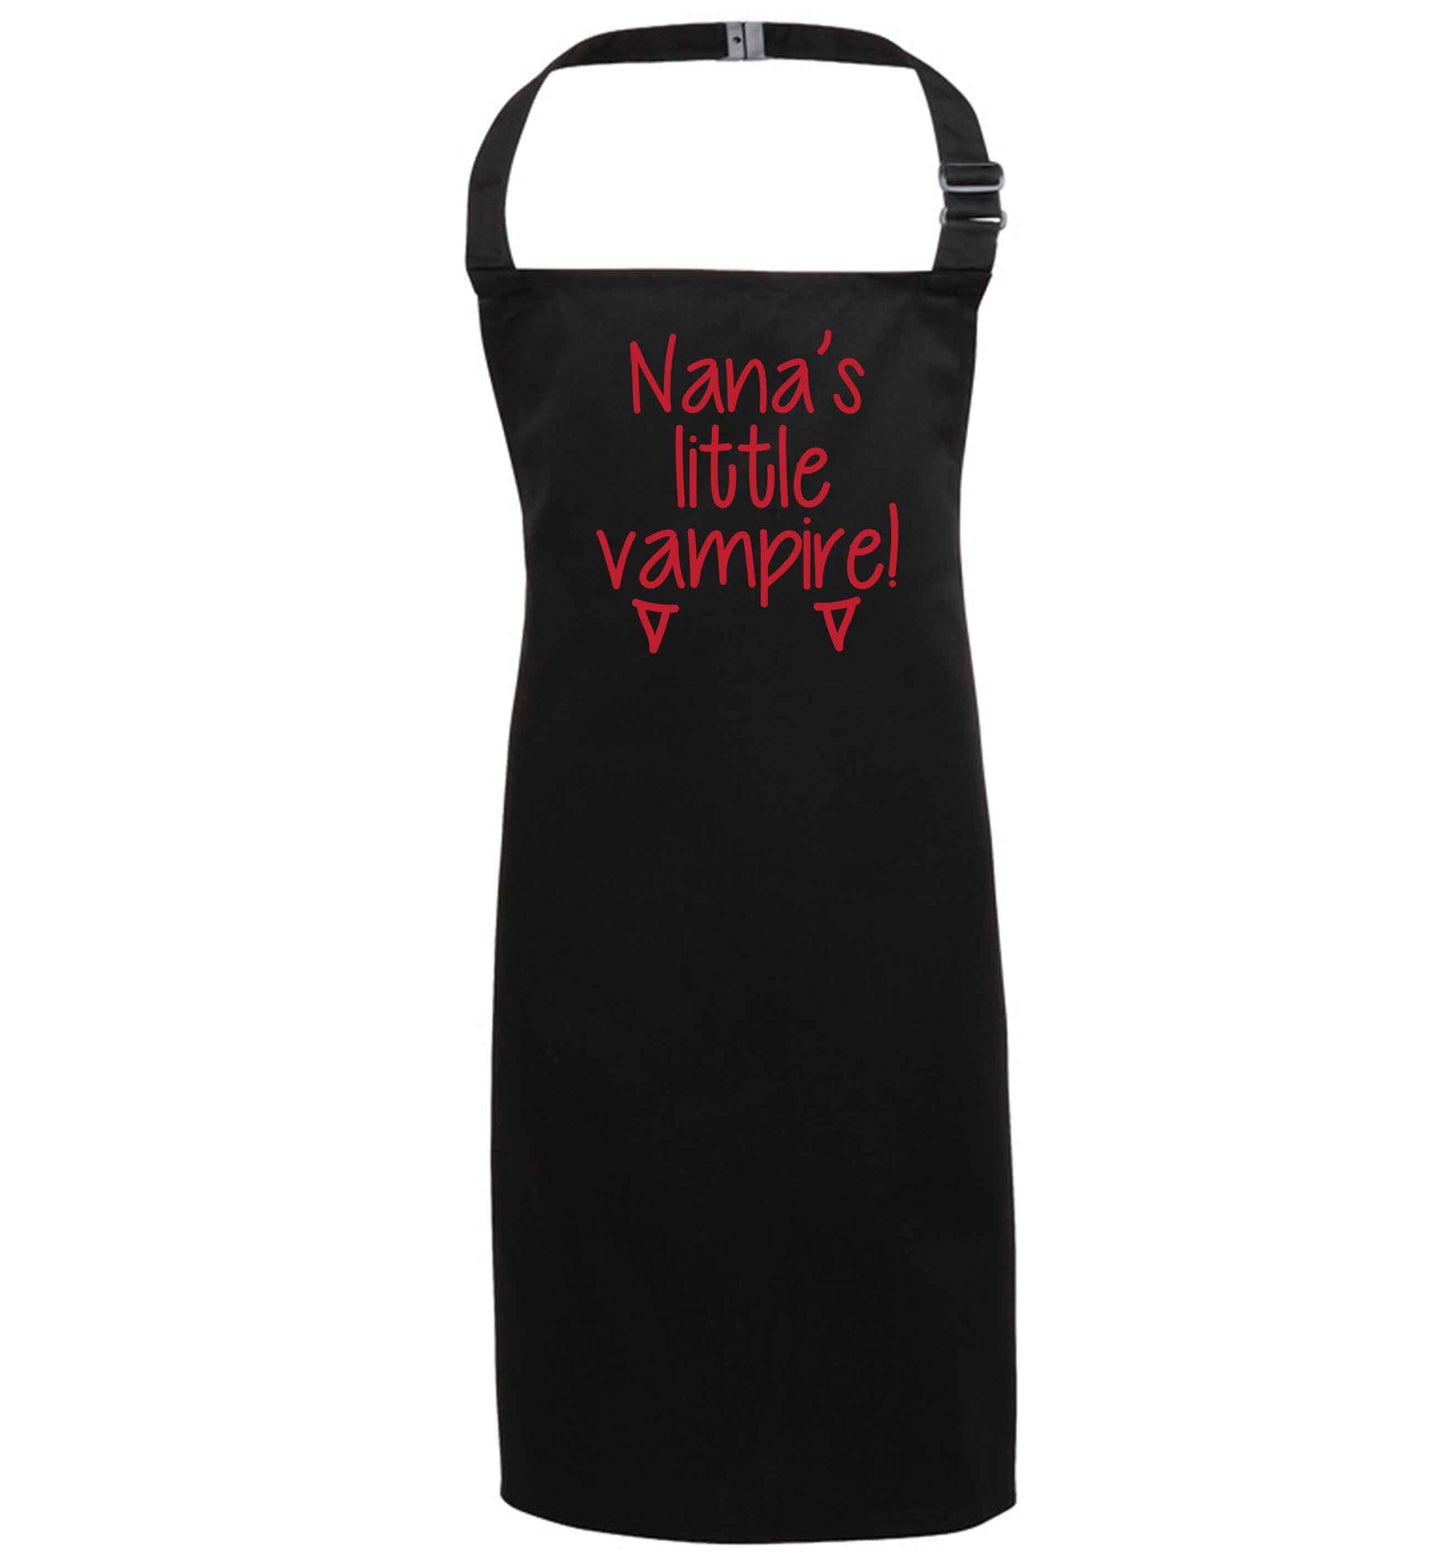 Nana's little vampire black apron 7-10 years